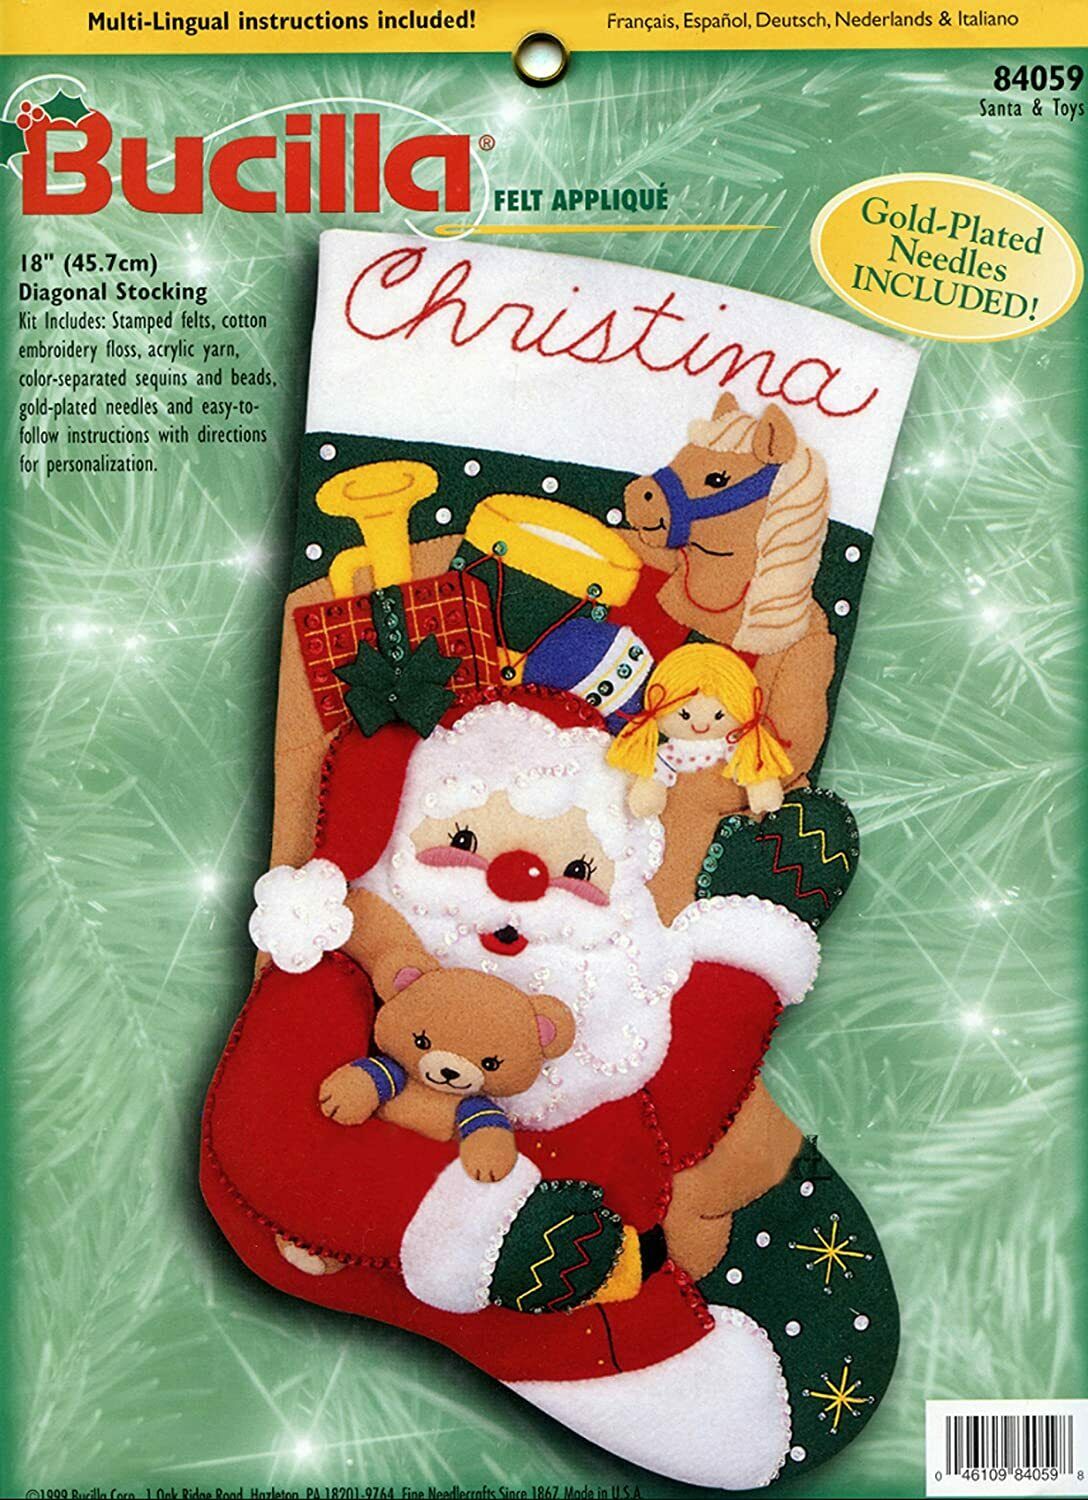 ᗷᑌᑕiᒪᒪᗩ 18" Felt Applique Christmas Stocking Kit 🎄"santa & Toys" New!